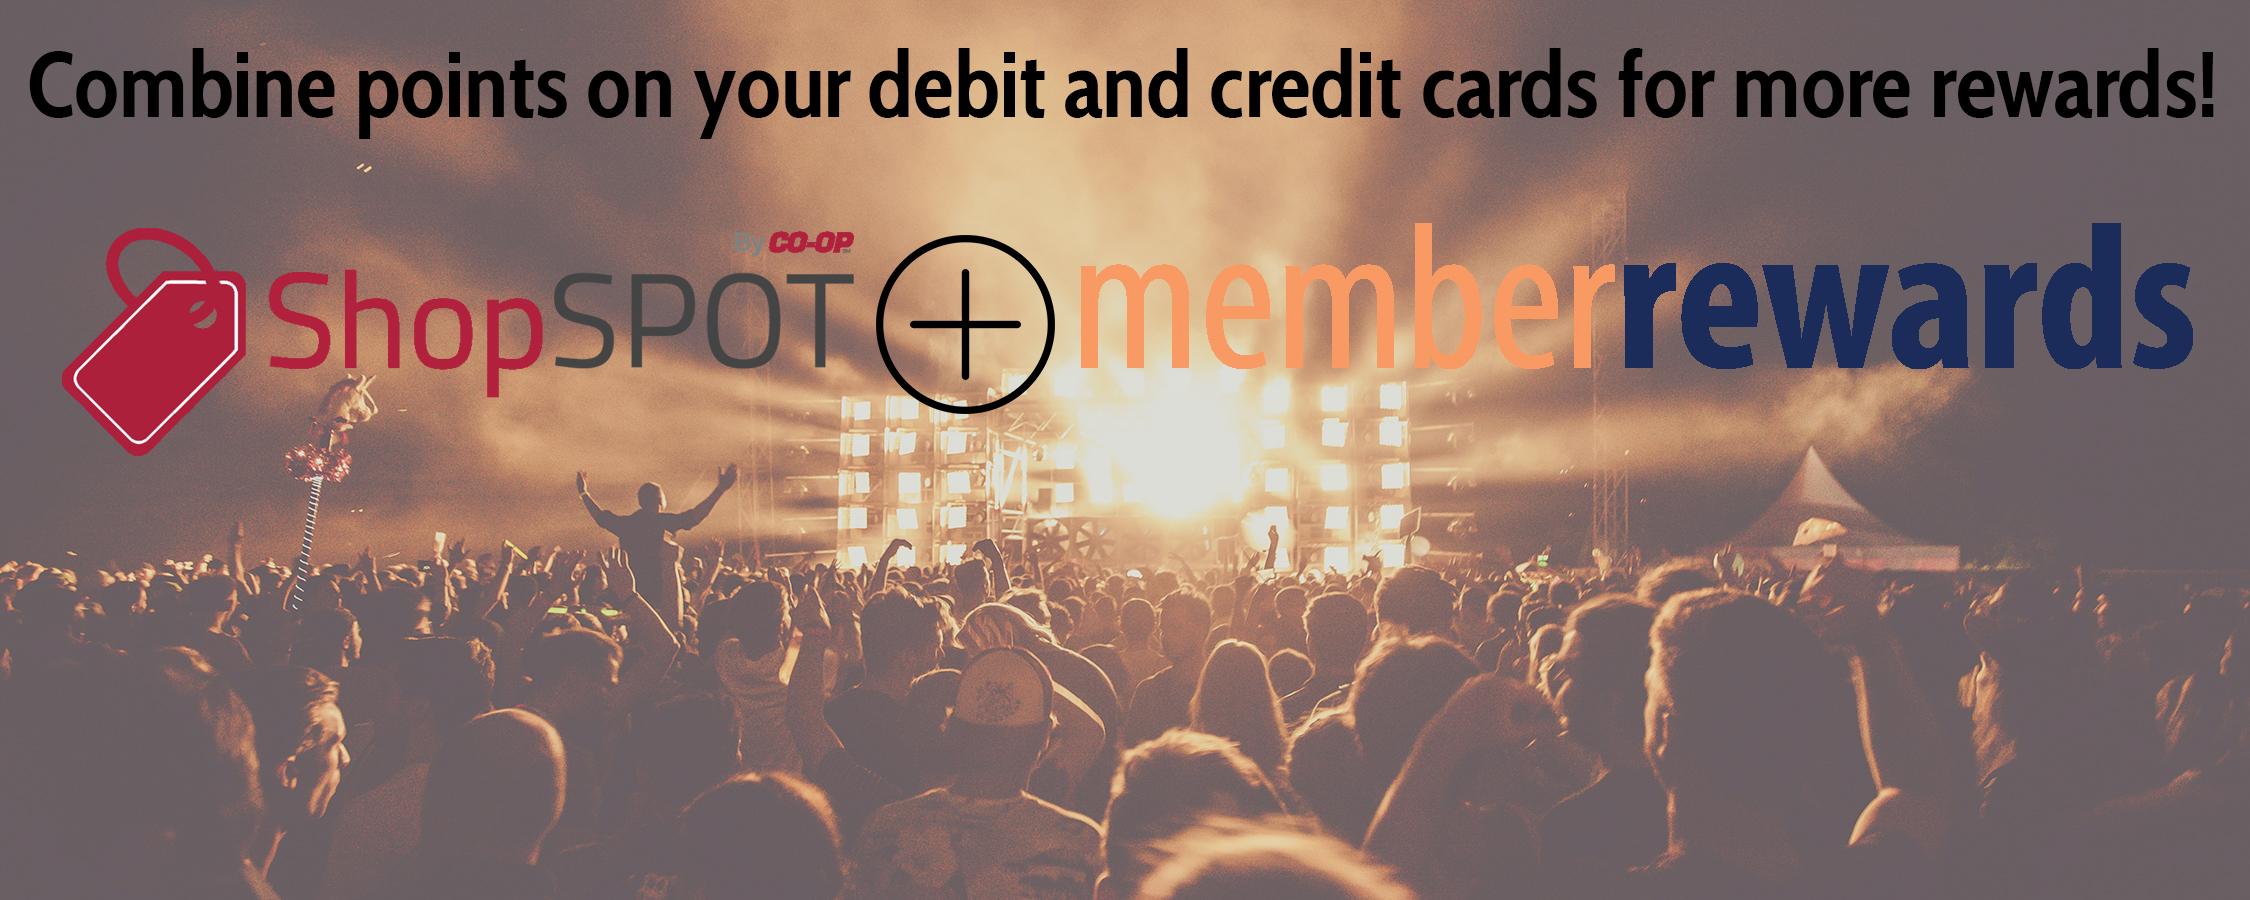 combine your debit and credit card rewards